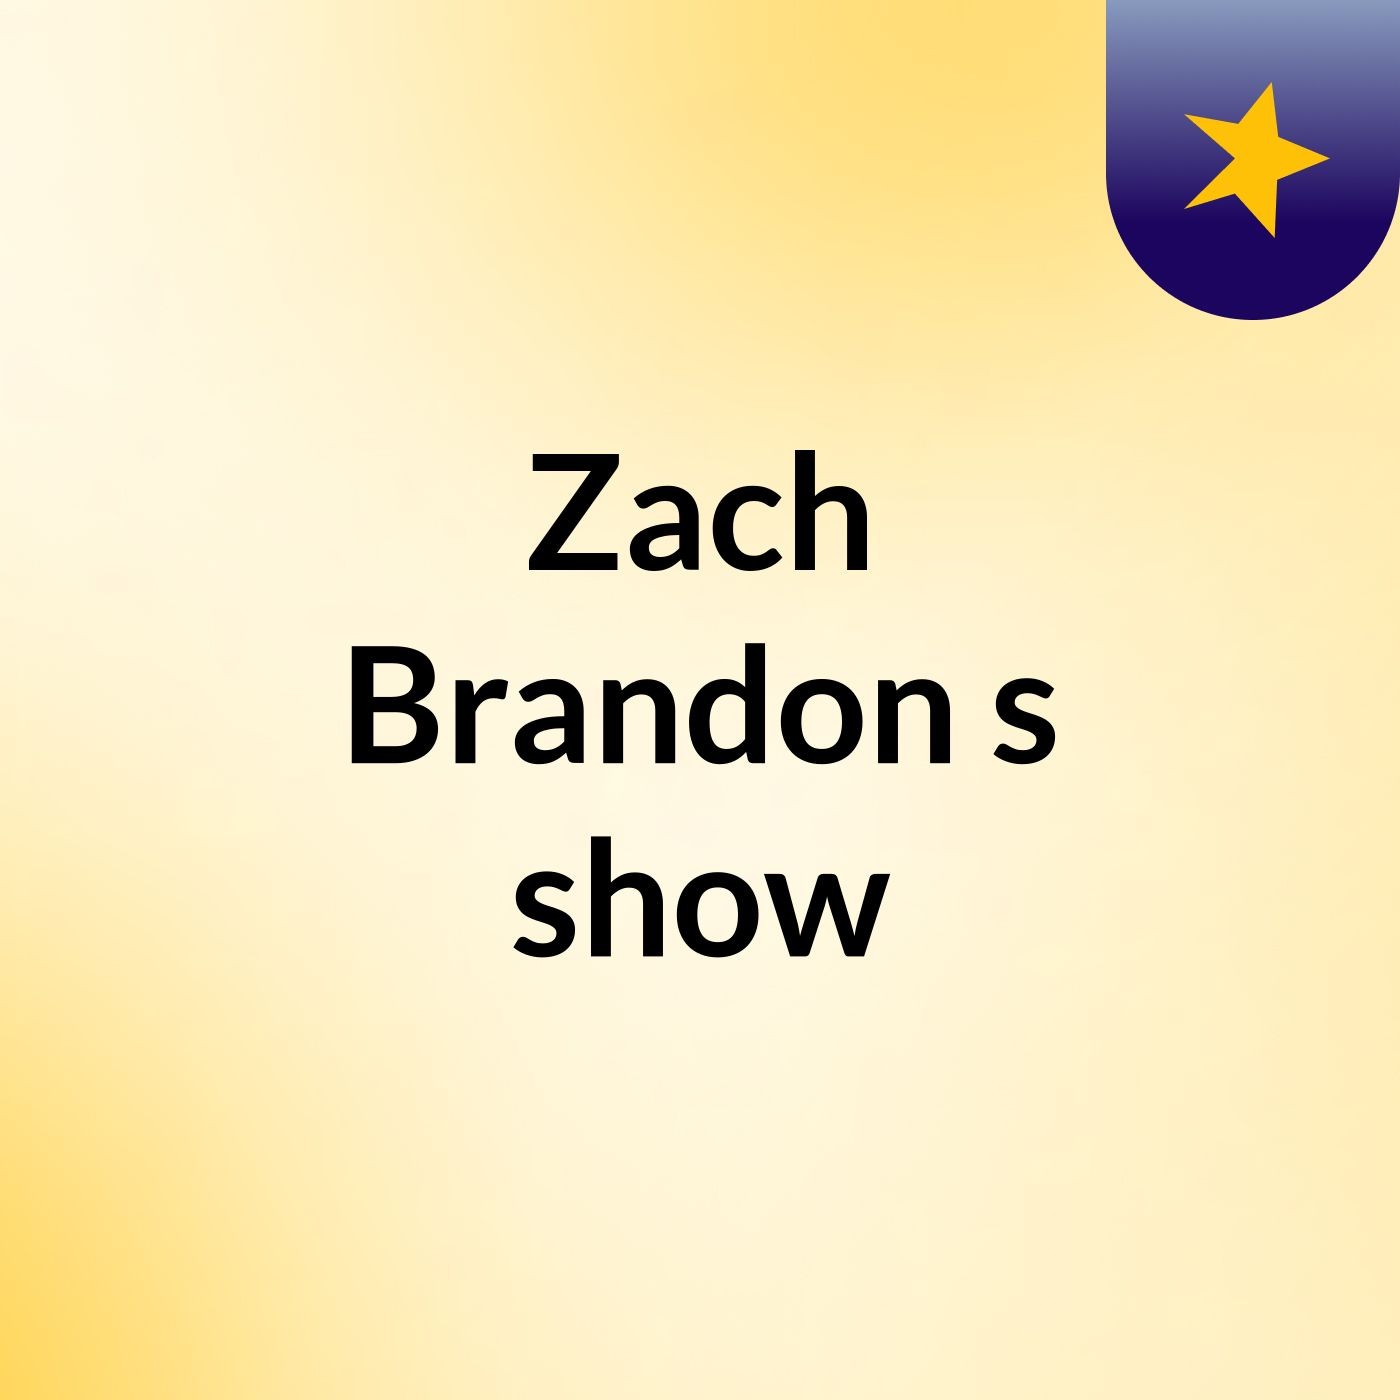 Zach Brandon's show